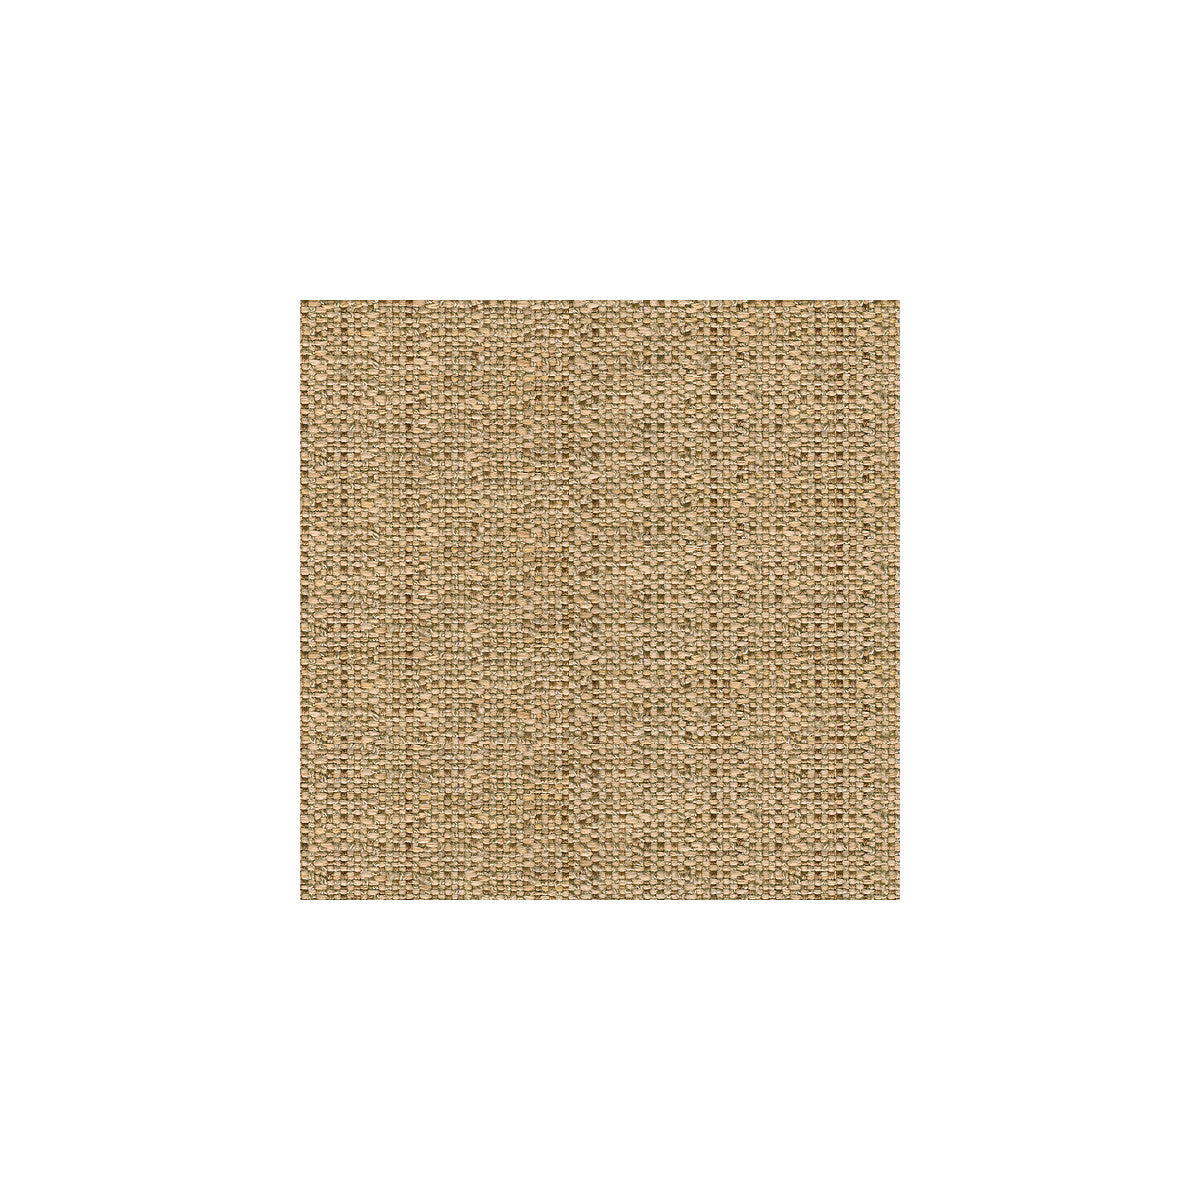 Kravet Smart fabric in 33033-16 color - pattern 33033.16.0 - by Kravet Smart